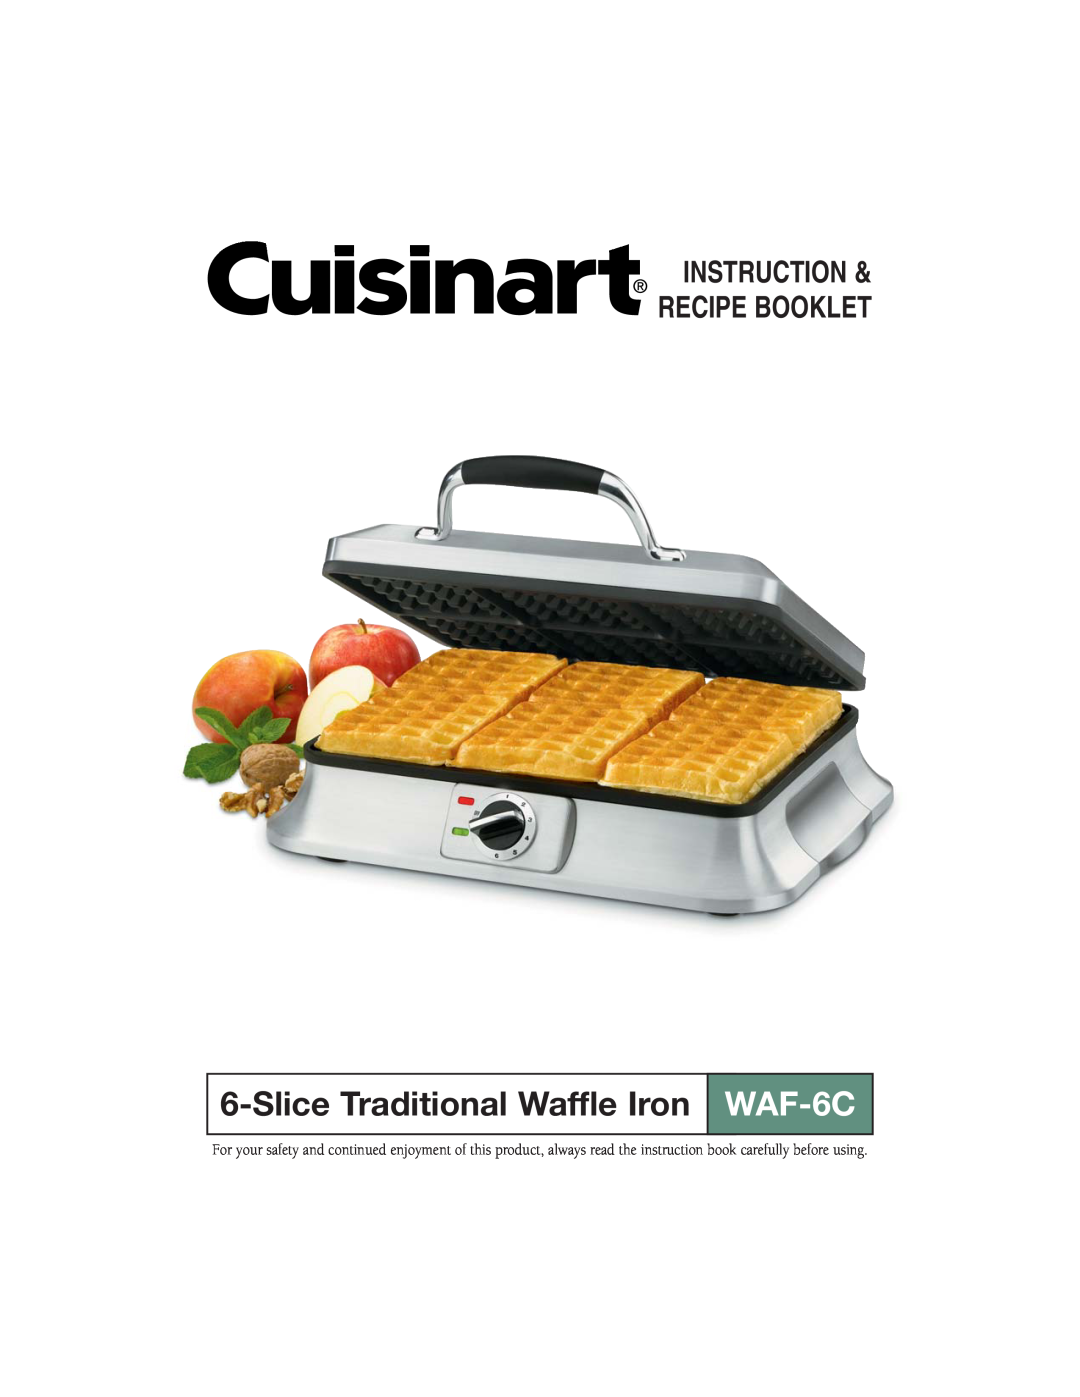 Cuisinart WAF-6C manual SliceTraditional Waffle Iron, Instruction & Recipe Booklet 